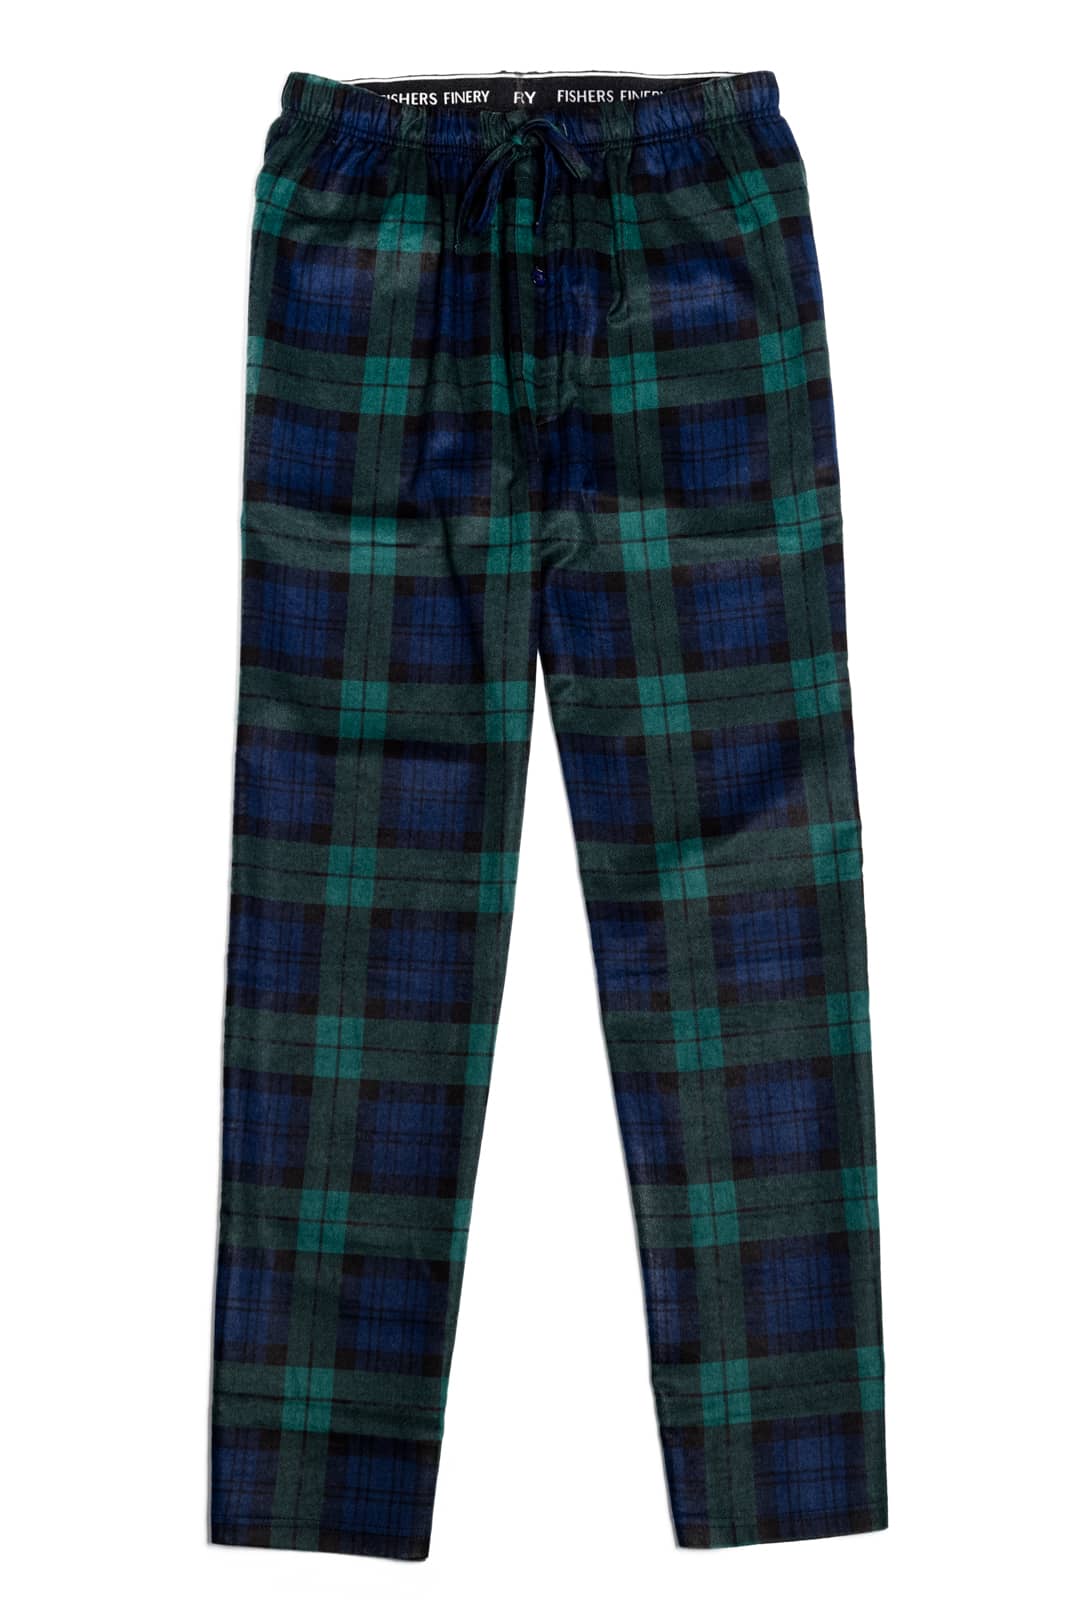 Green Plaid Pajama Pants